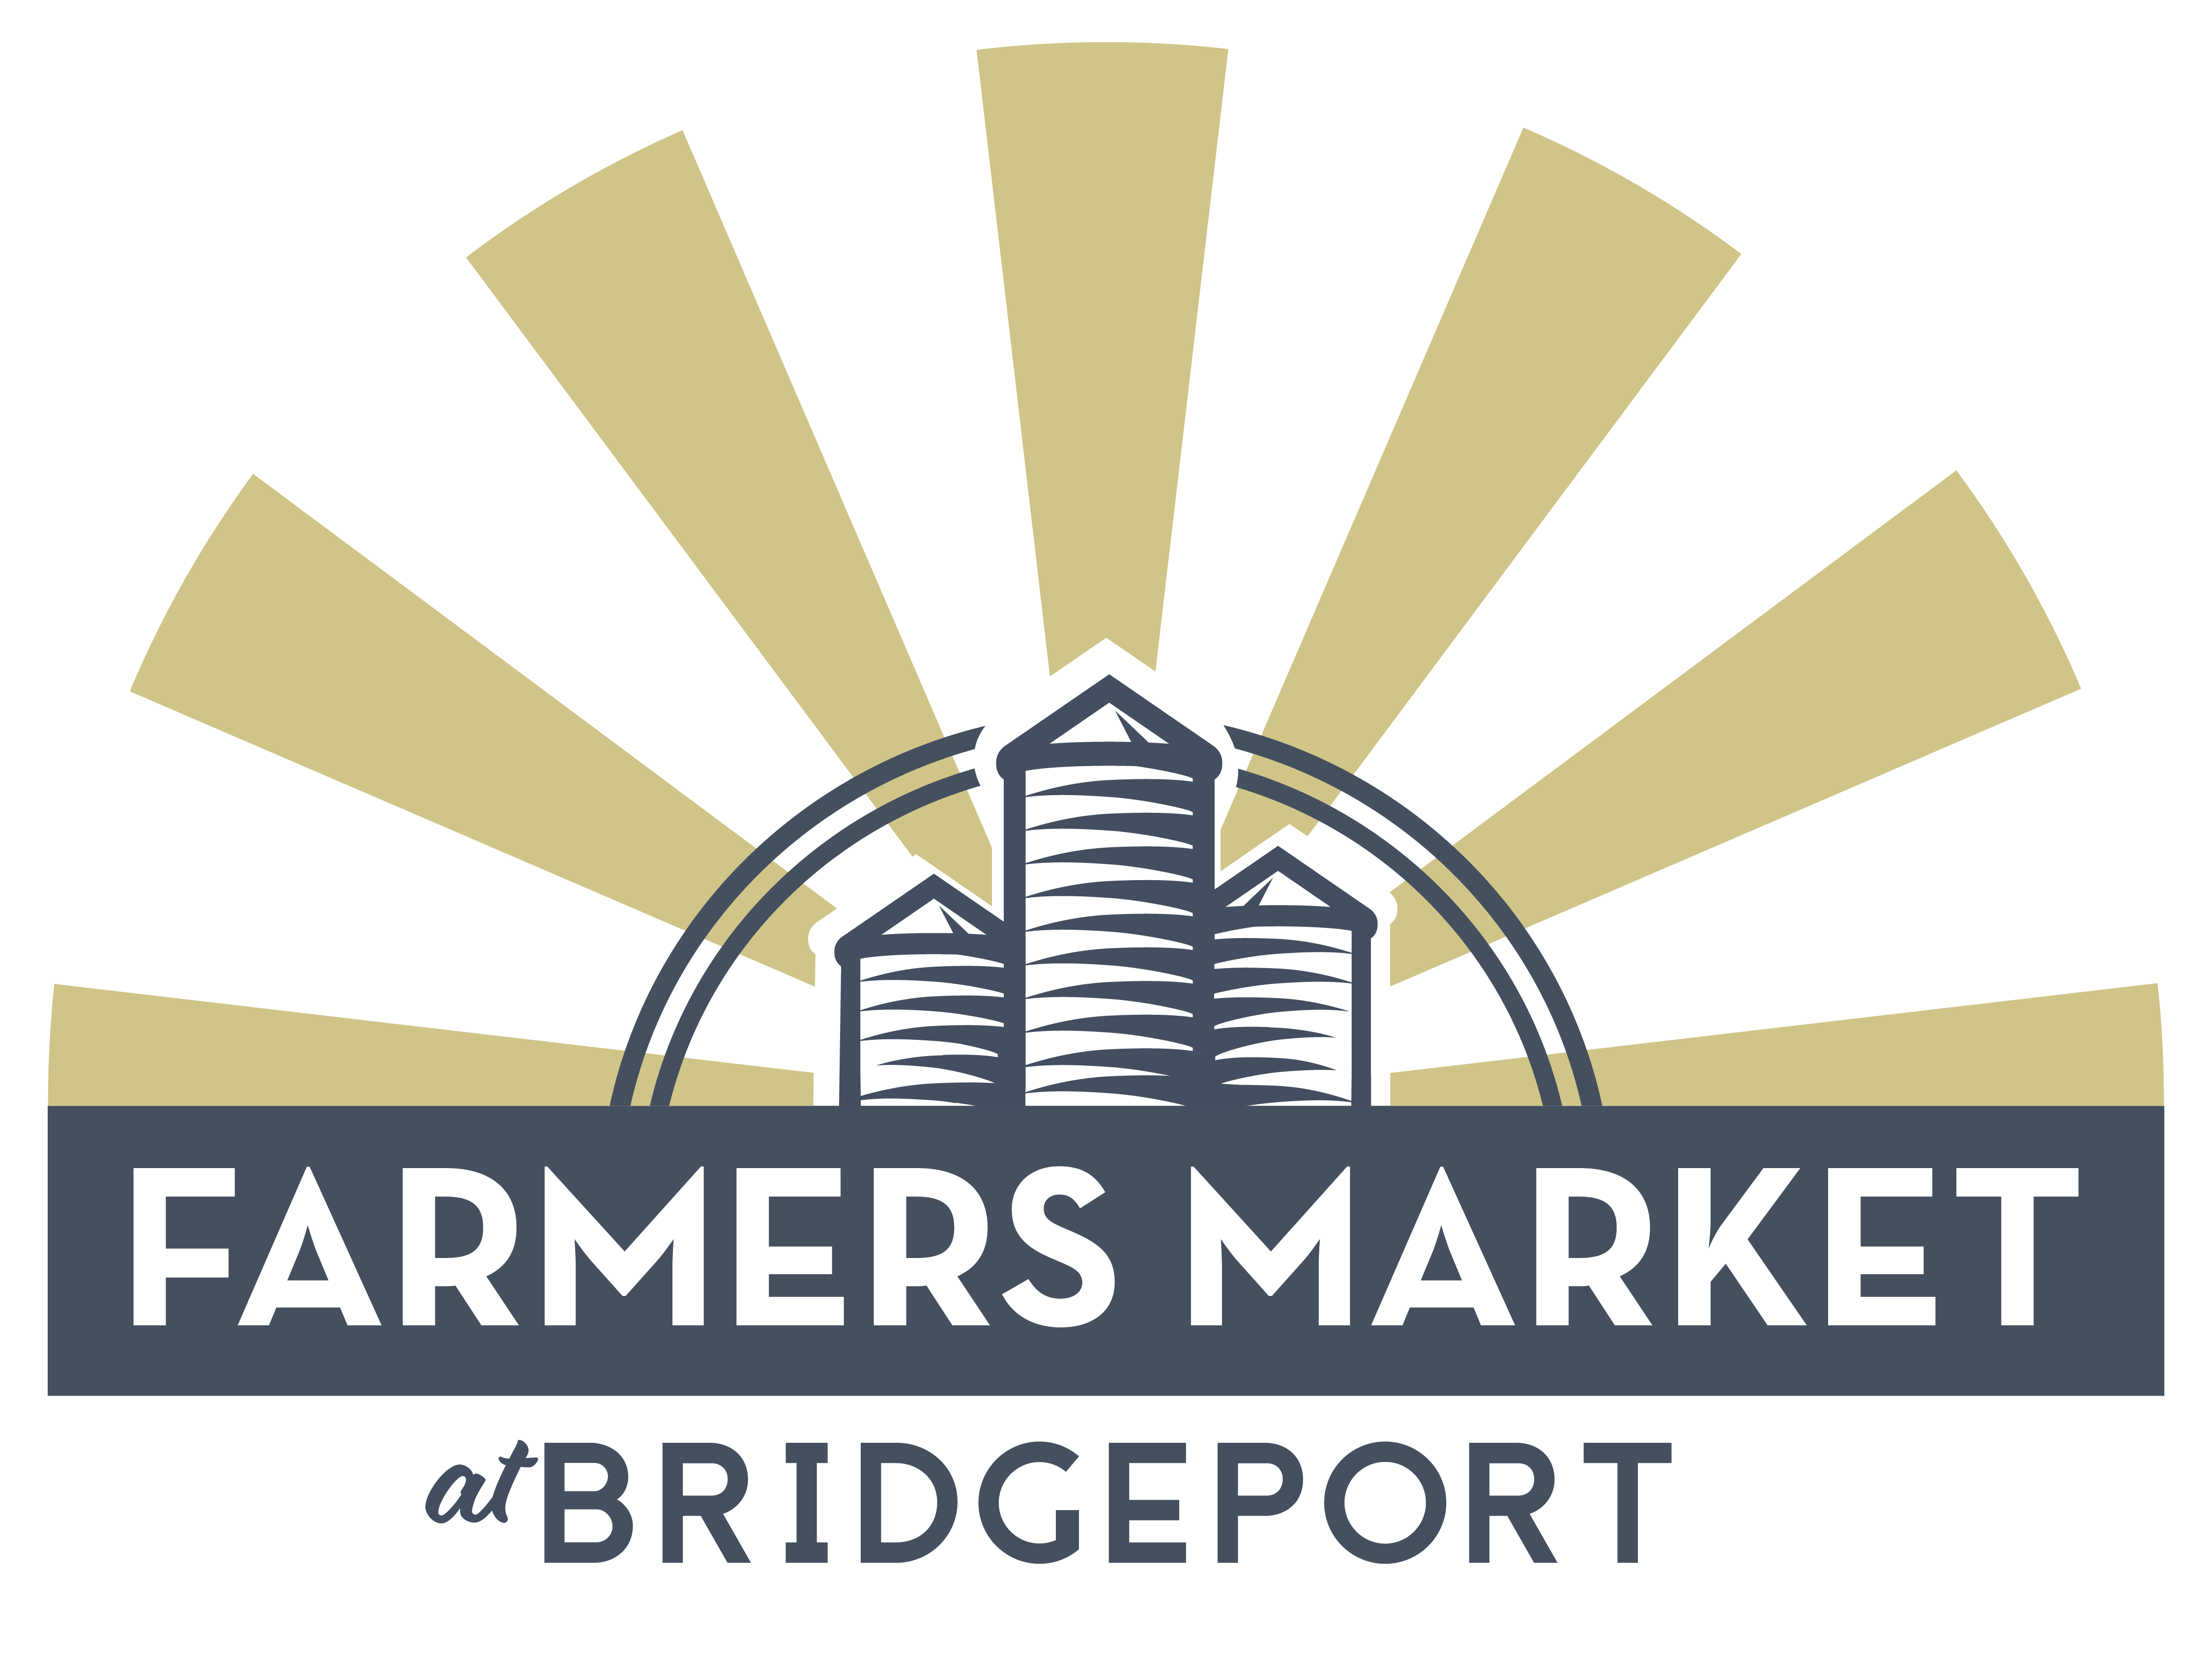 Farmers Market at Bridgeport